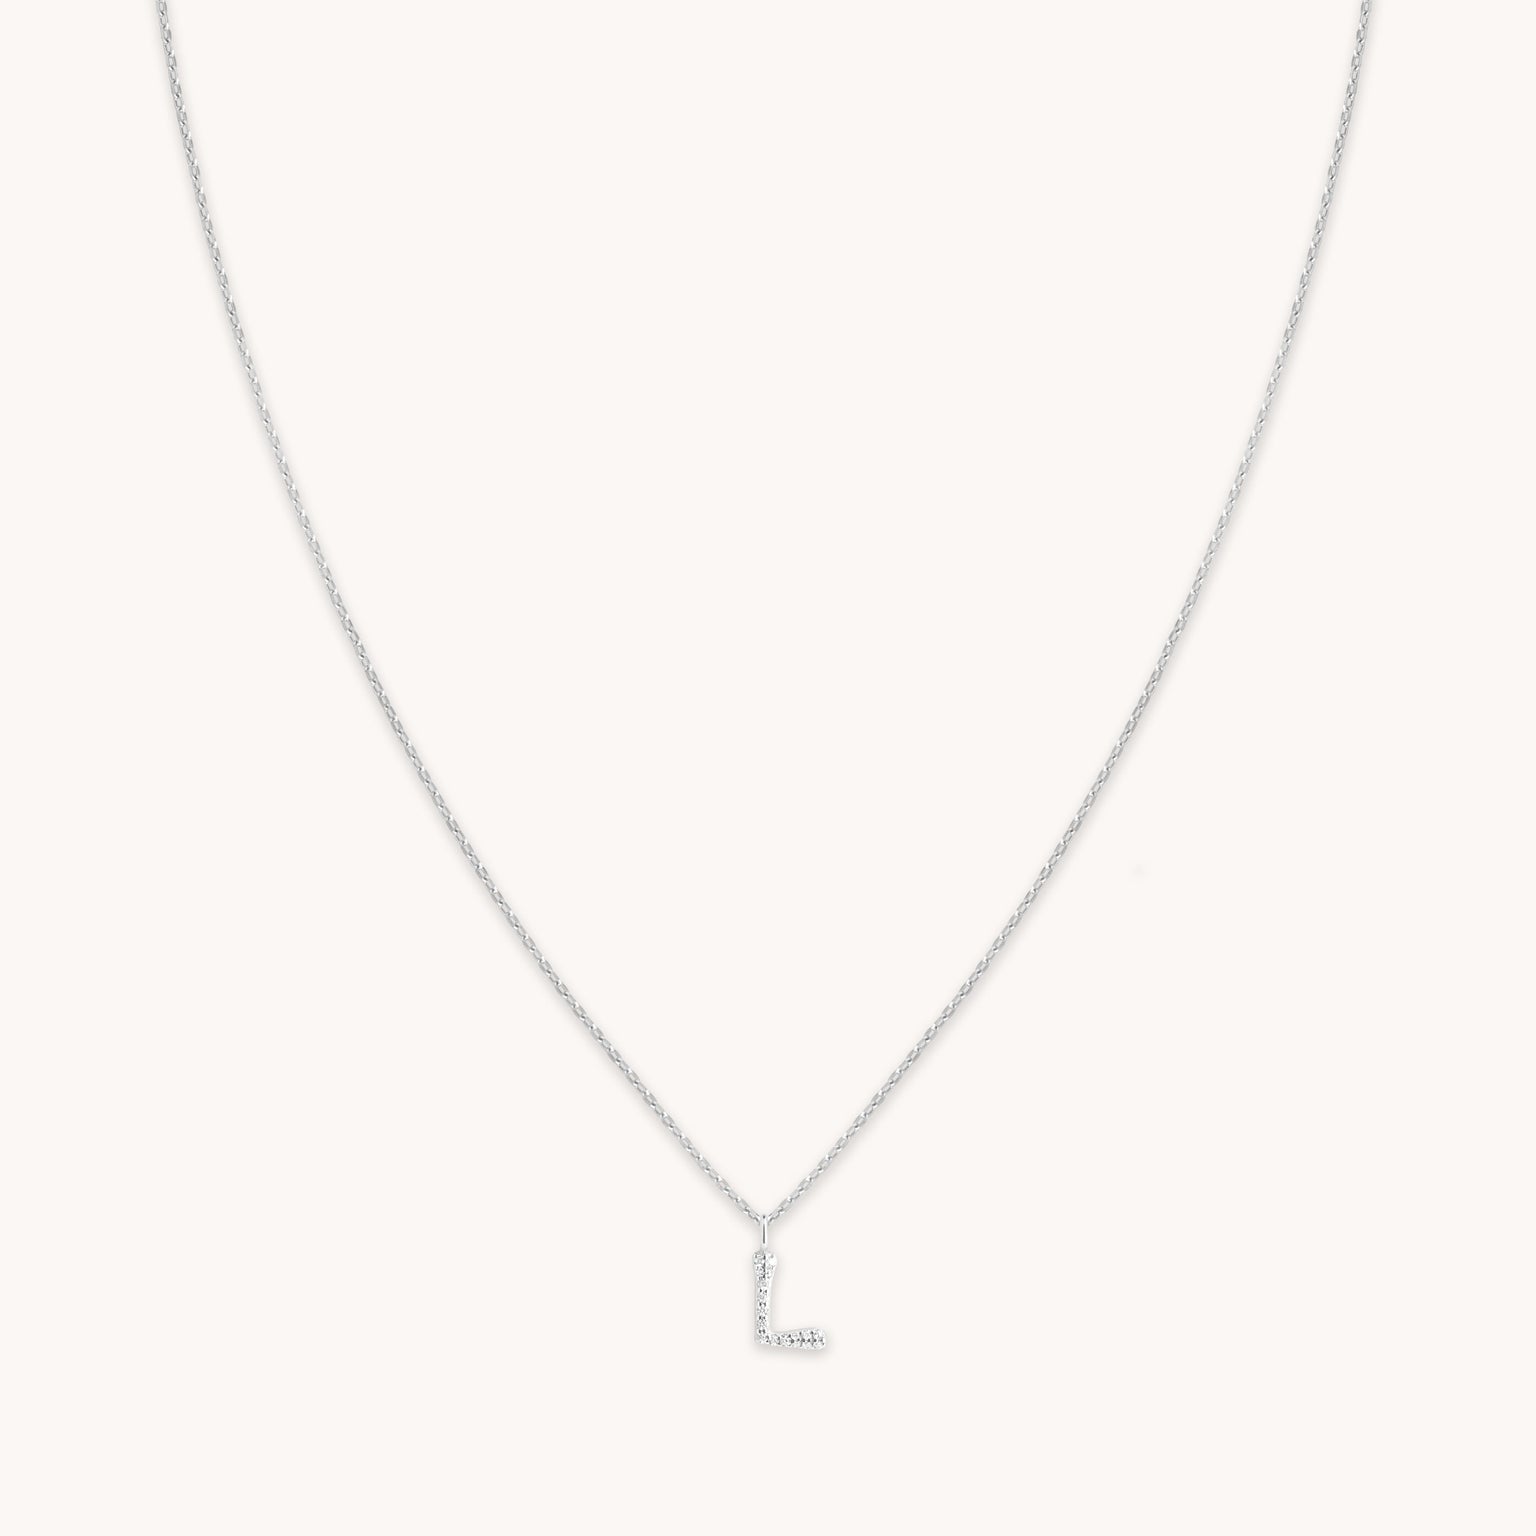 L Initial Pavé Pendant Necklace in Silver